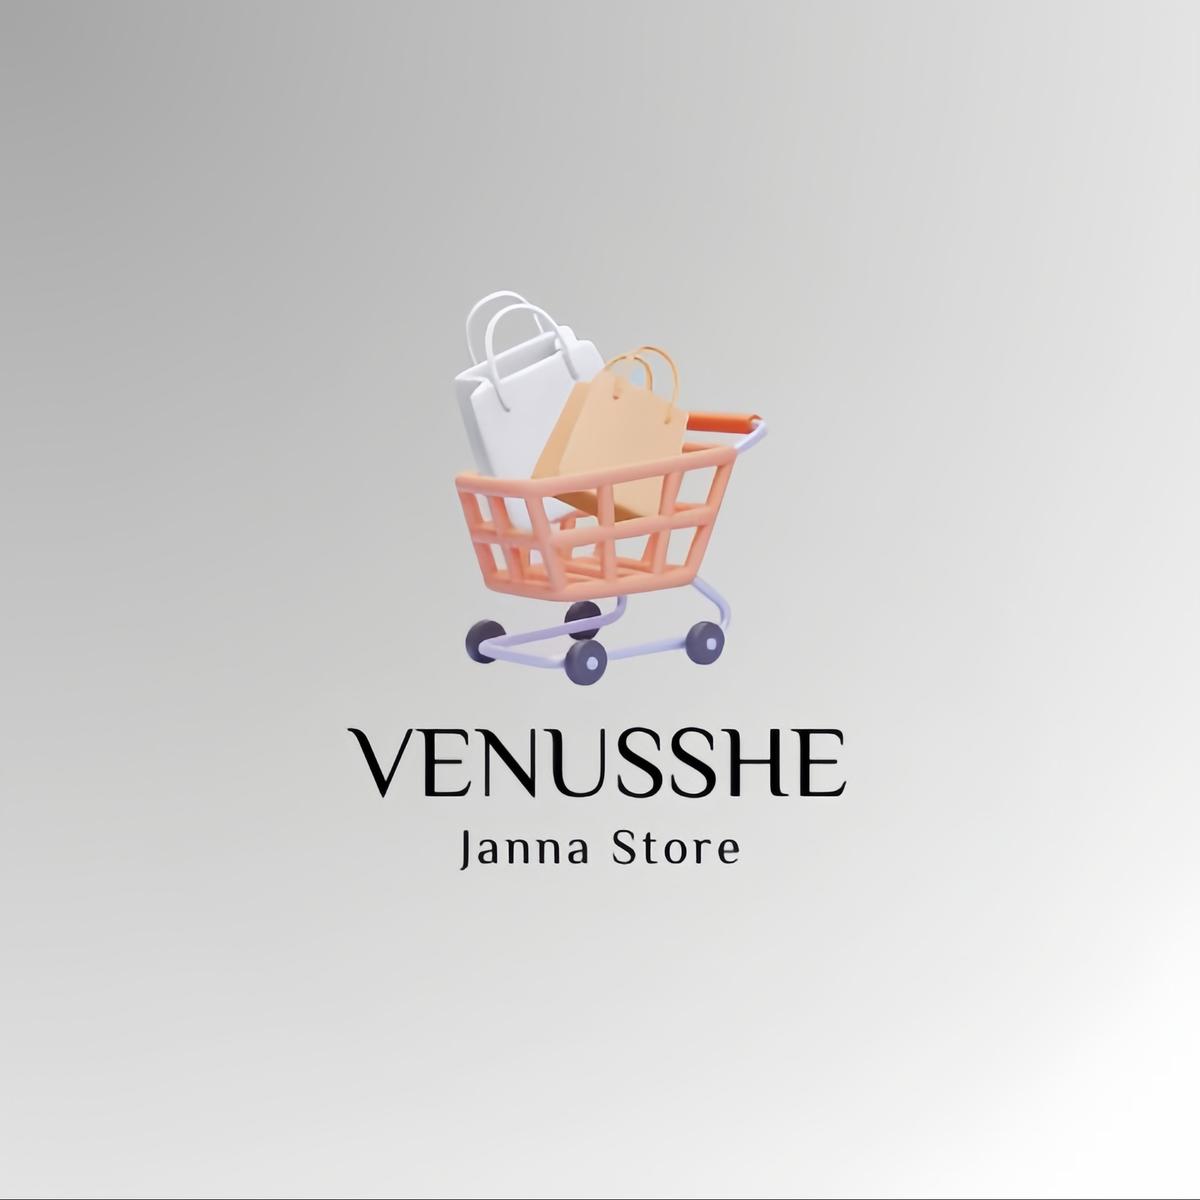 Venusshe_